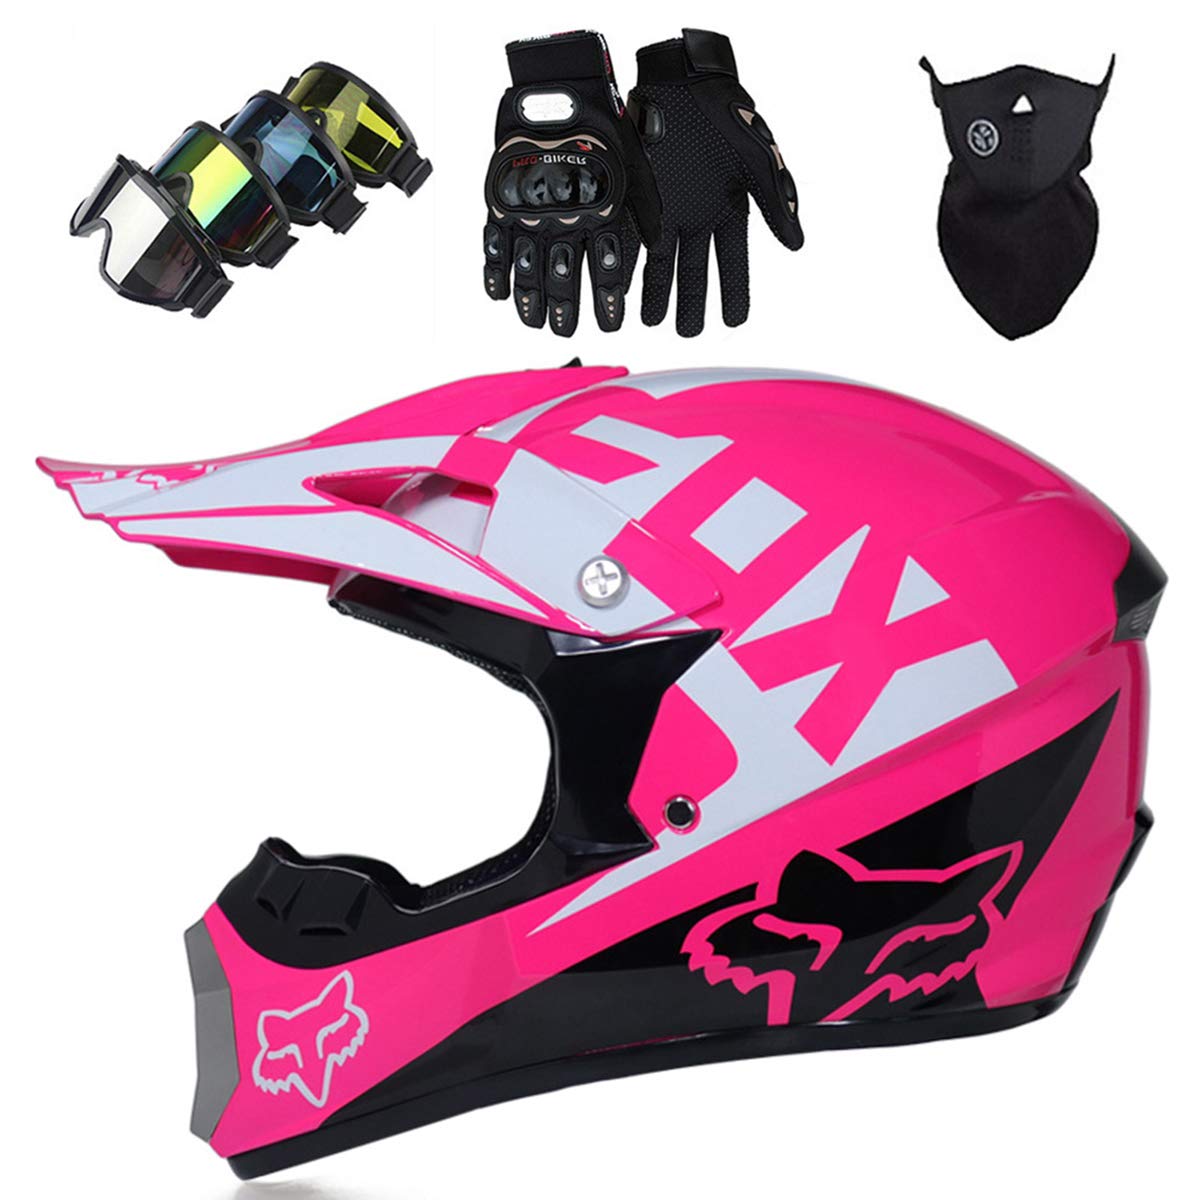 Motocross Helm, Pro Kinder Adult DH Fullface Motorrad Cross Helm Set (Brille Handschuhe Maske) für MTB ATV Roller Downhill Offroad - DOT - mit Fox Design - Persönlichkeit cool - Rosa,XL von KIVEM